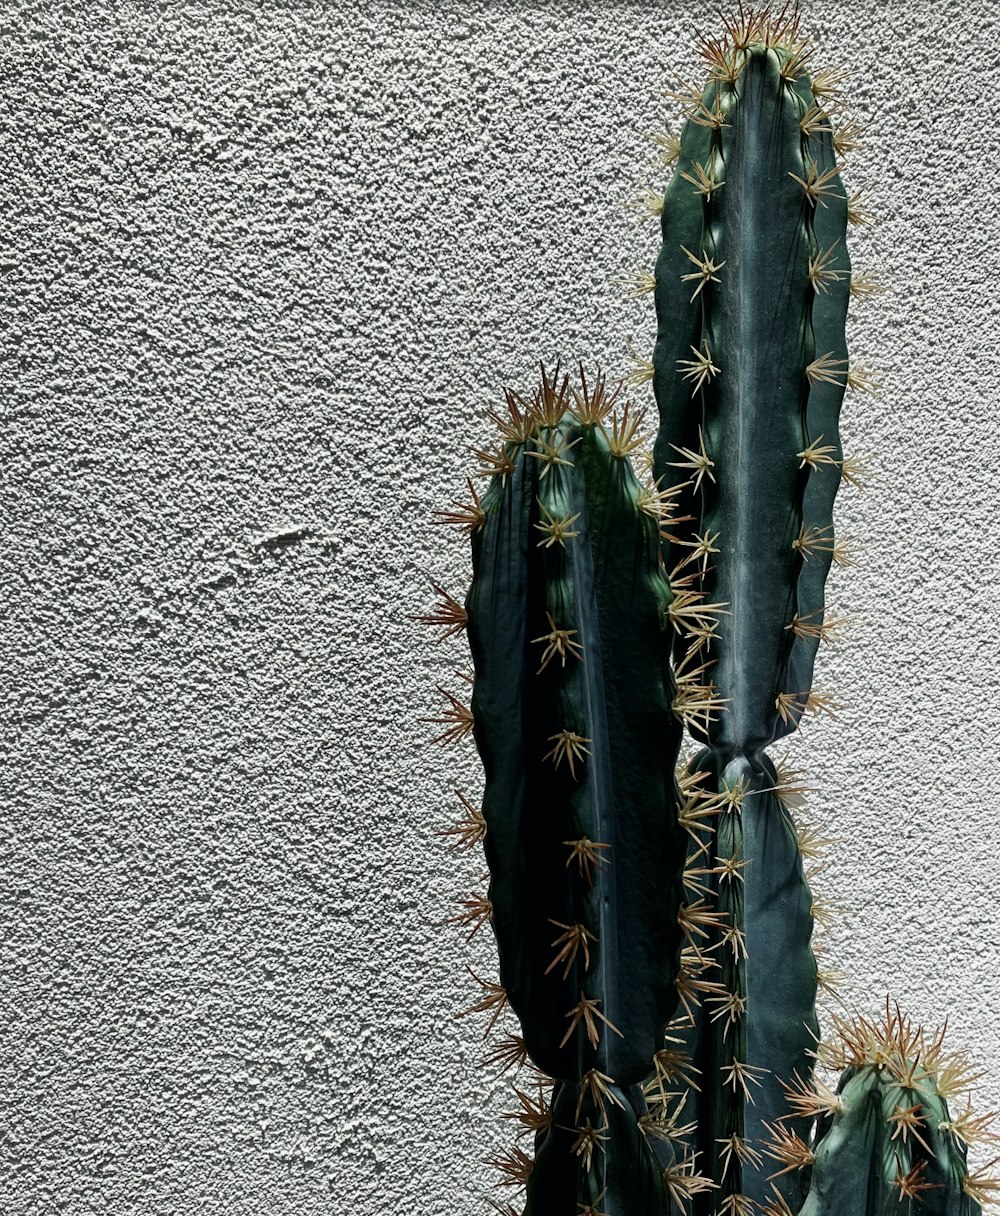 green cactus plant